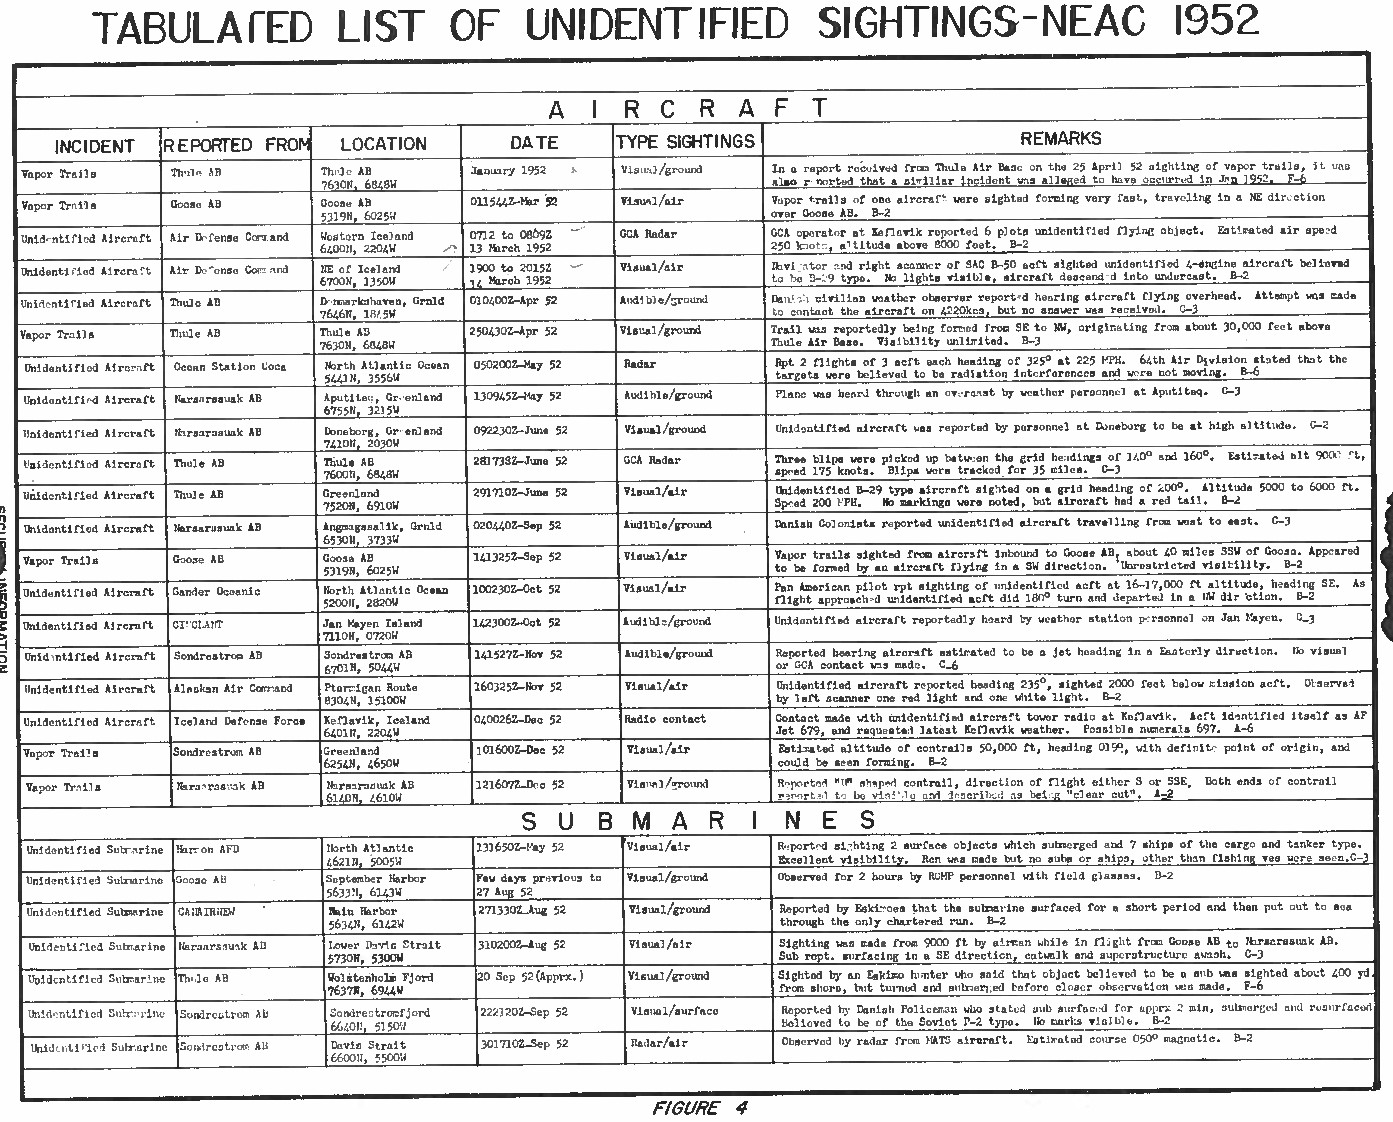 NEAC UFO Analysis 1952 - Figure 4